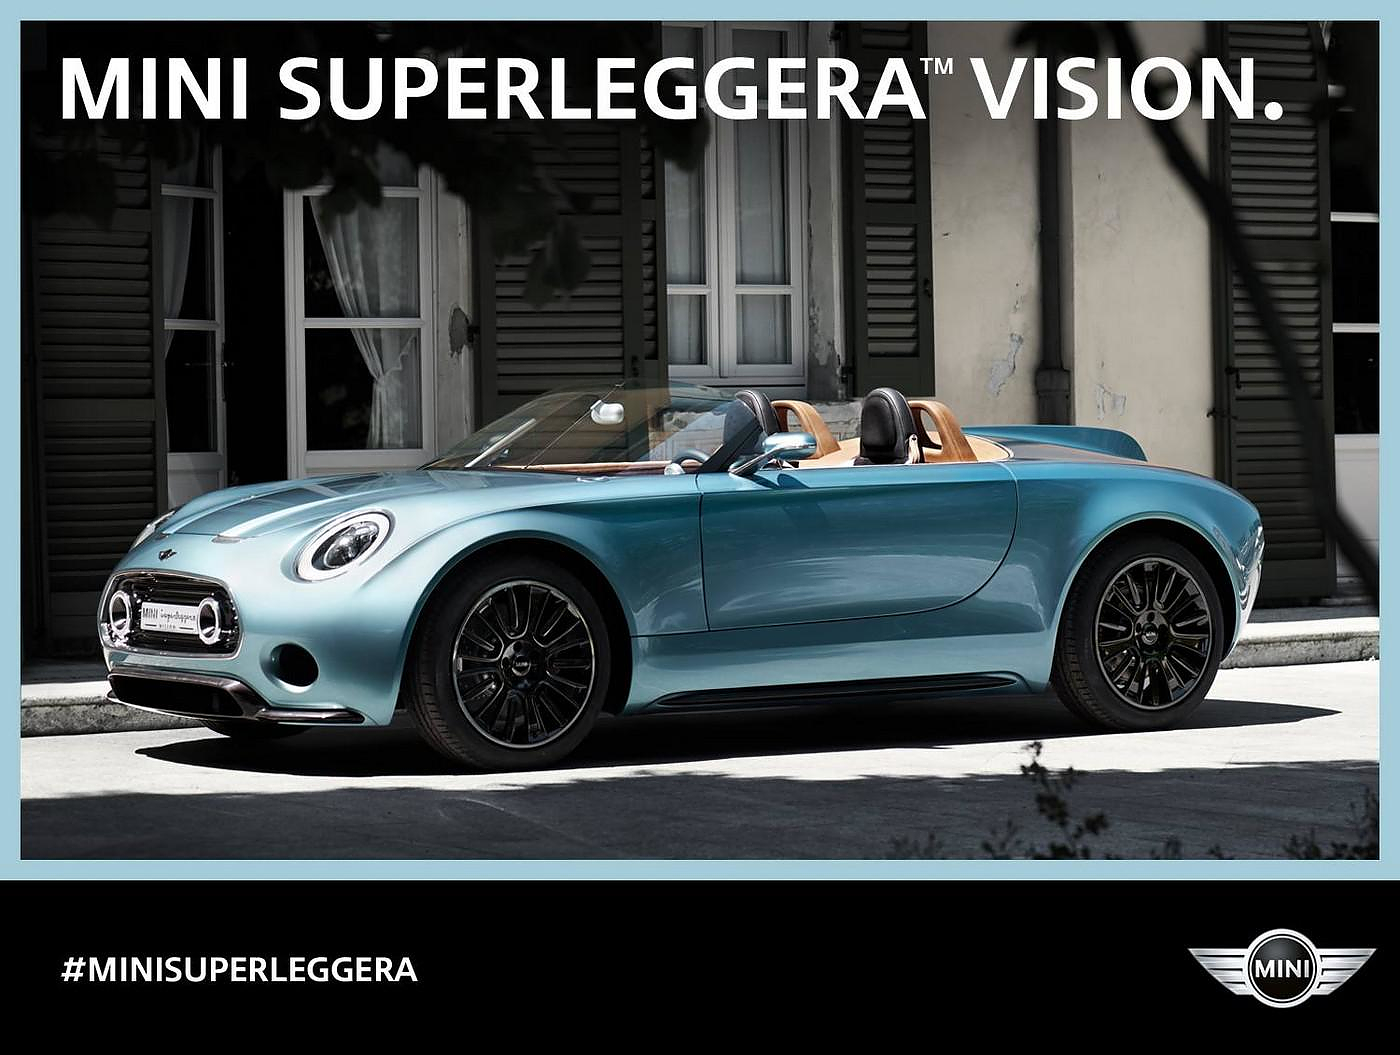 Mini Superleggera Vision Concept a beautiful all-electric Mini Roadster.